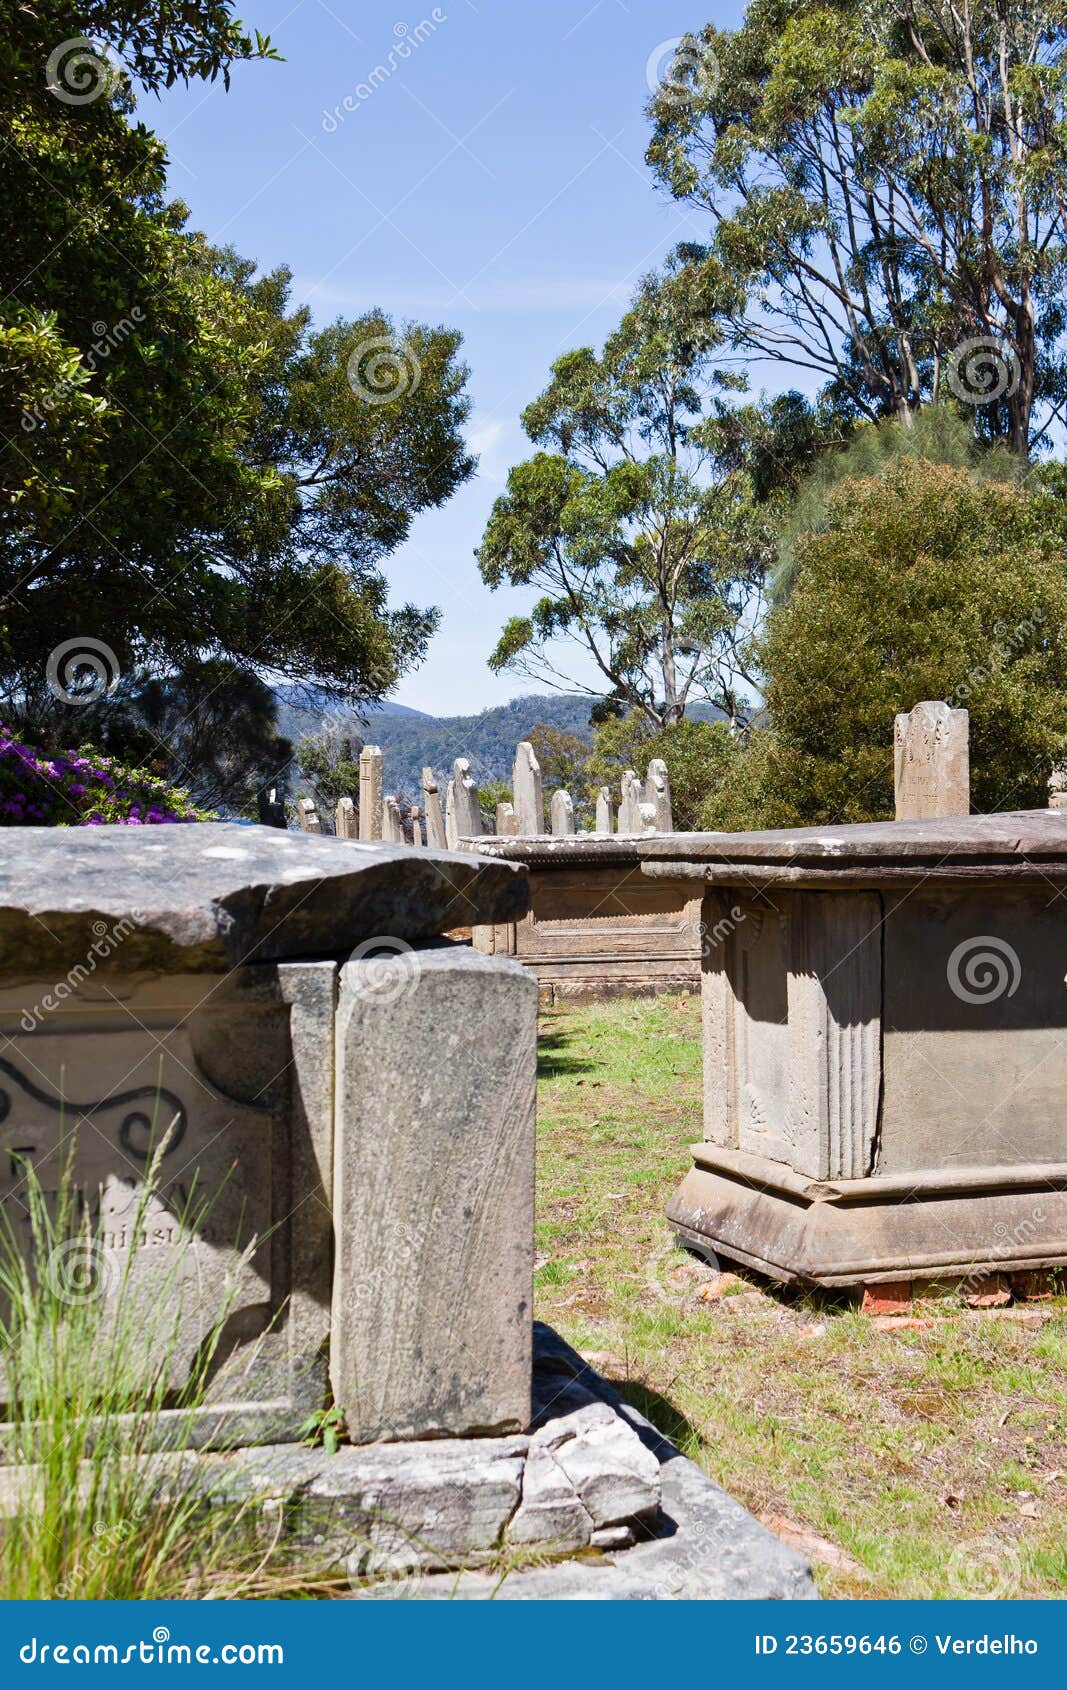 graves on isle of the dead, port arthur